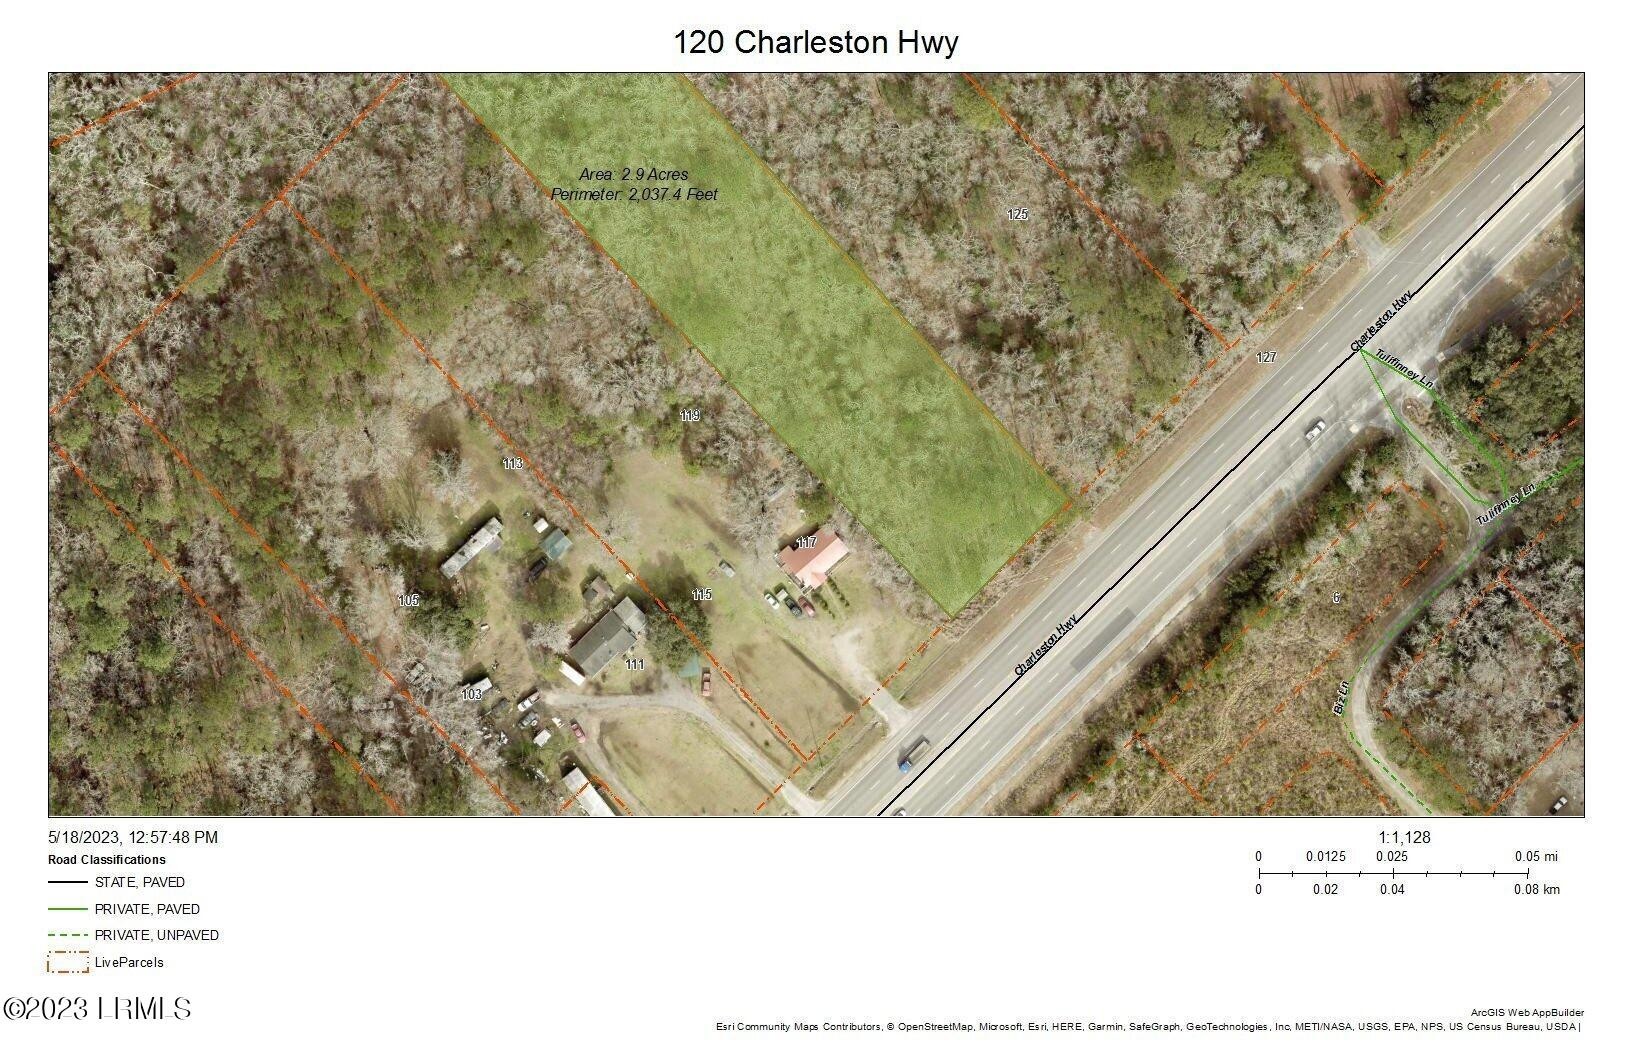 2. 120 Charleston Highway Highway